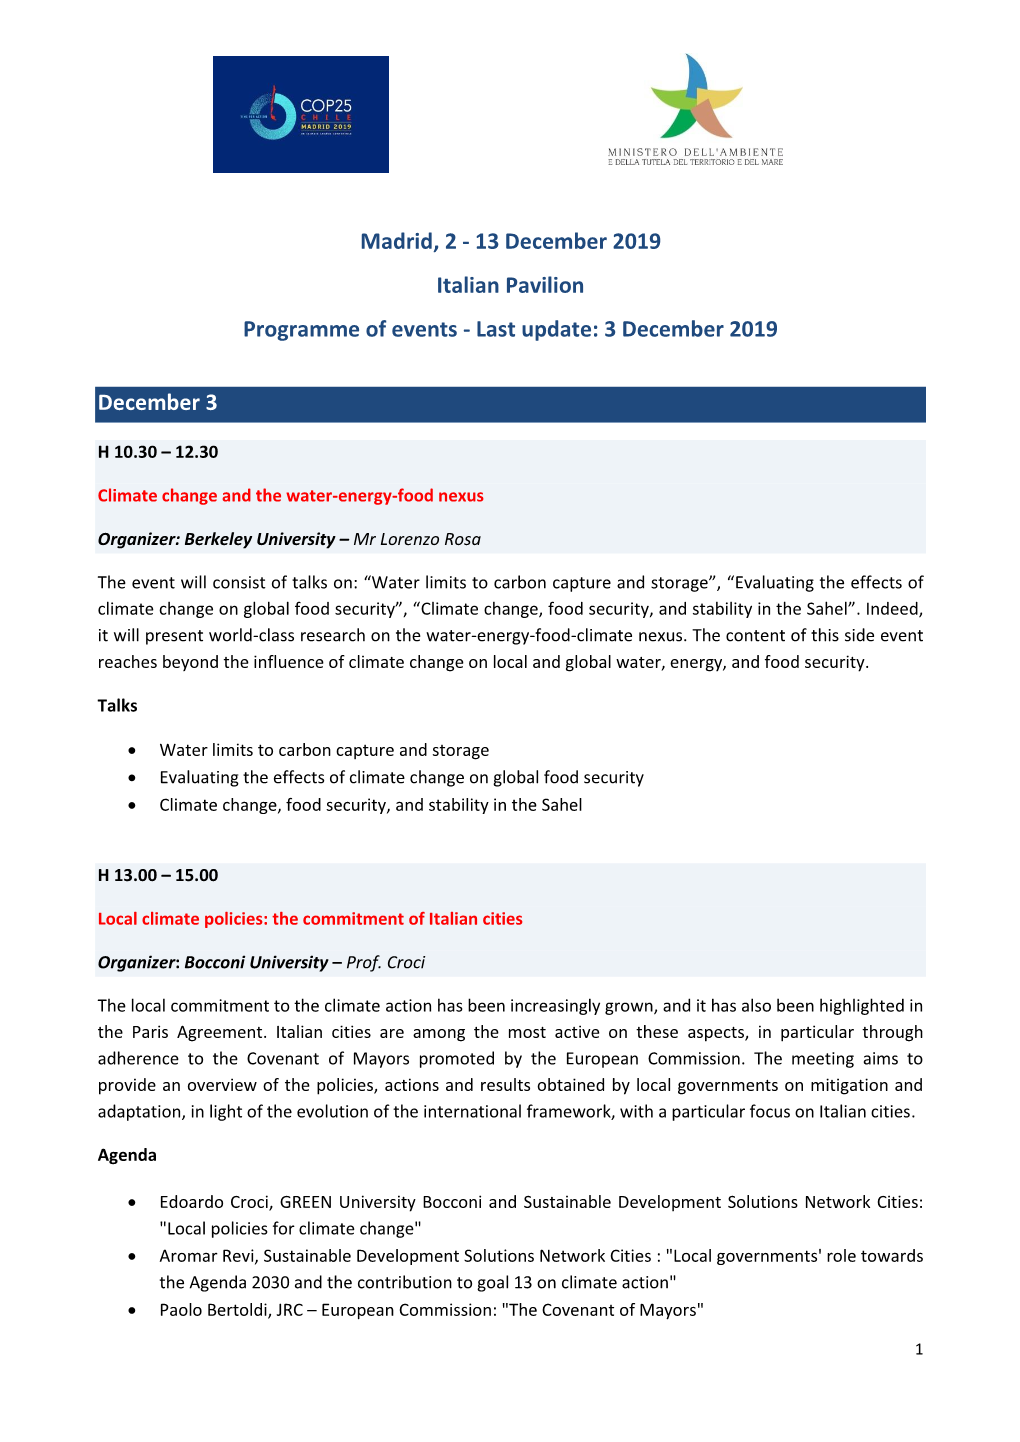 Madrid, 2 - 13 December 2019 Italian Pavilion Programme of Events - Last Update: 3 December 2019